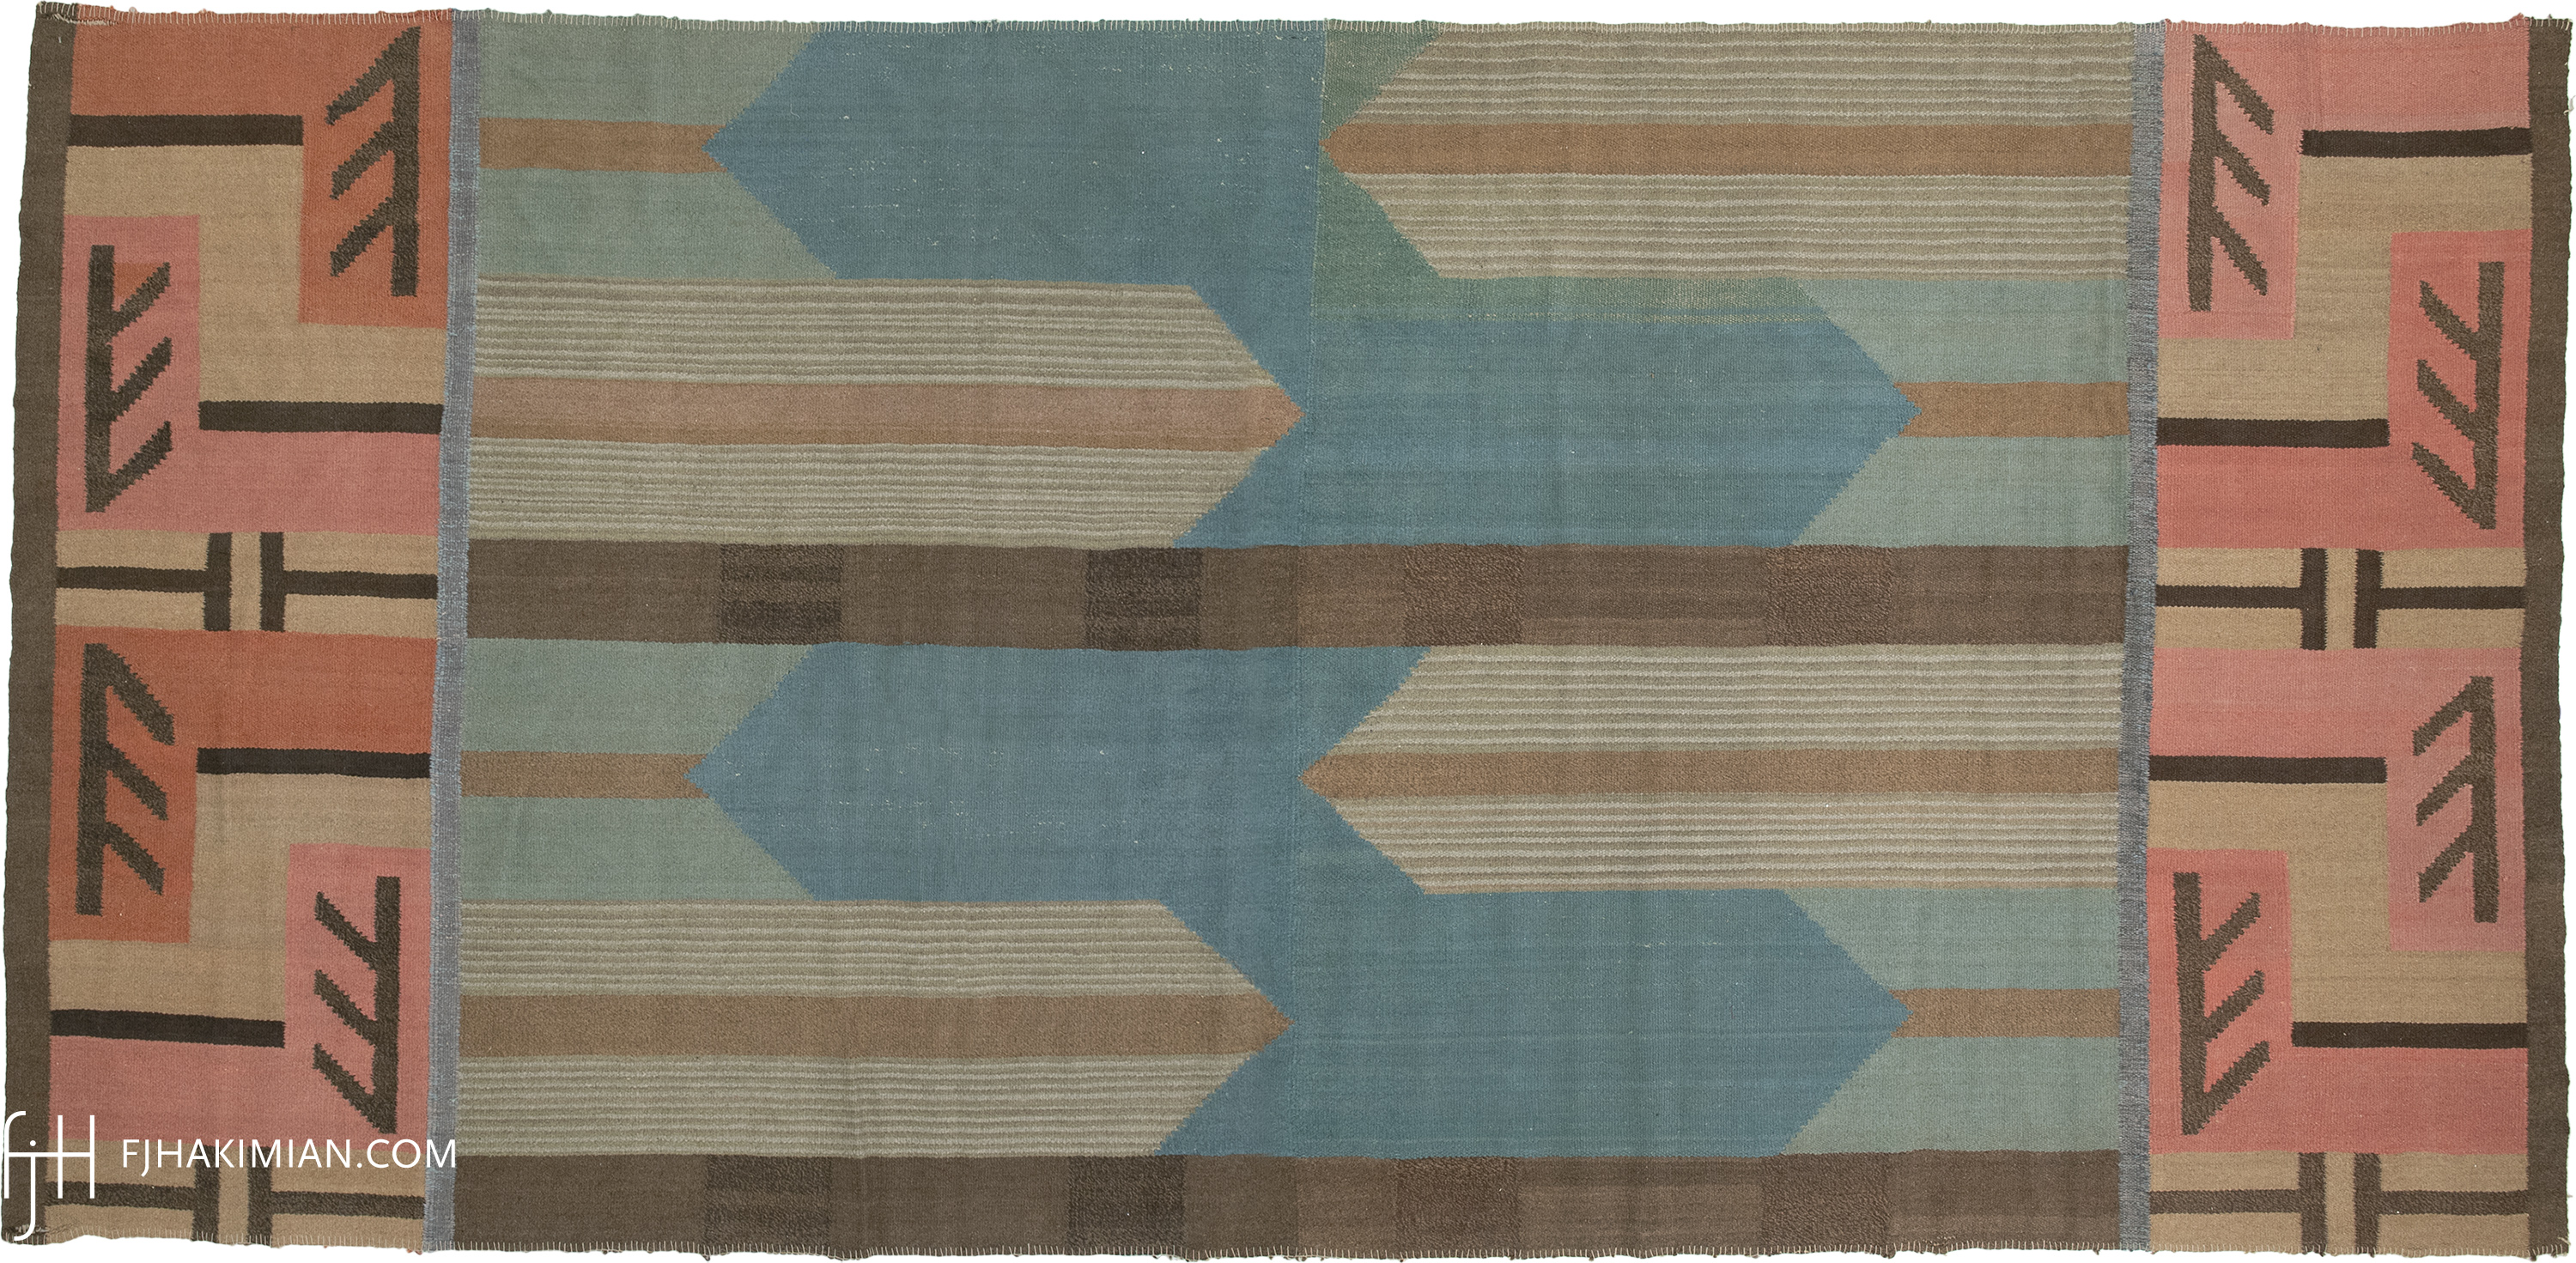 Vintage Finnish Flatweave | FJ Hakimian Carpet Gallery, New York 